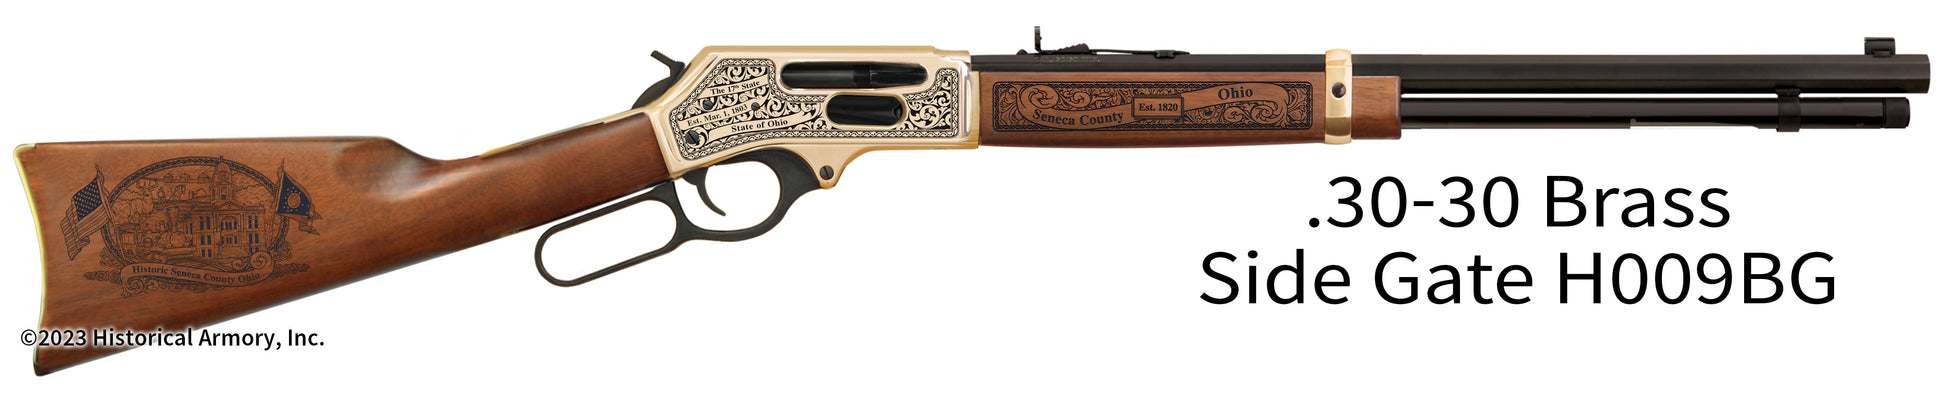 Seneca County Ohio Engraved Henry .30-30 Brass Side Gate Rifle